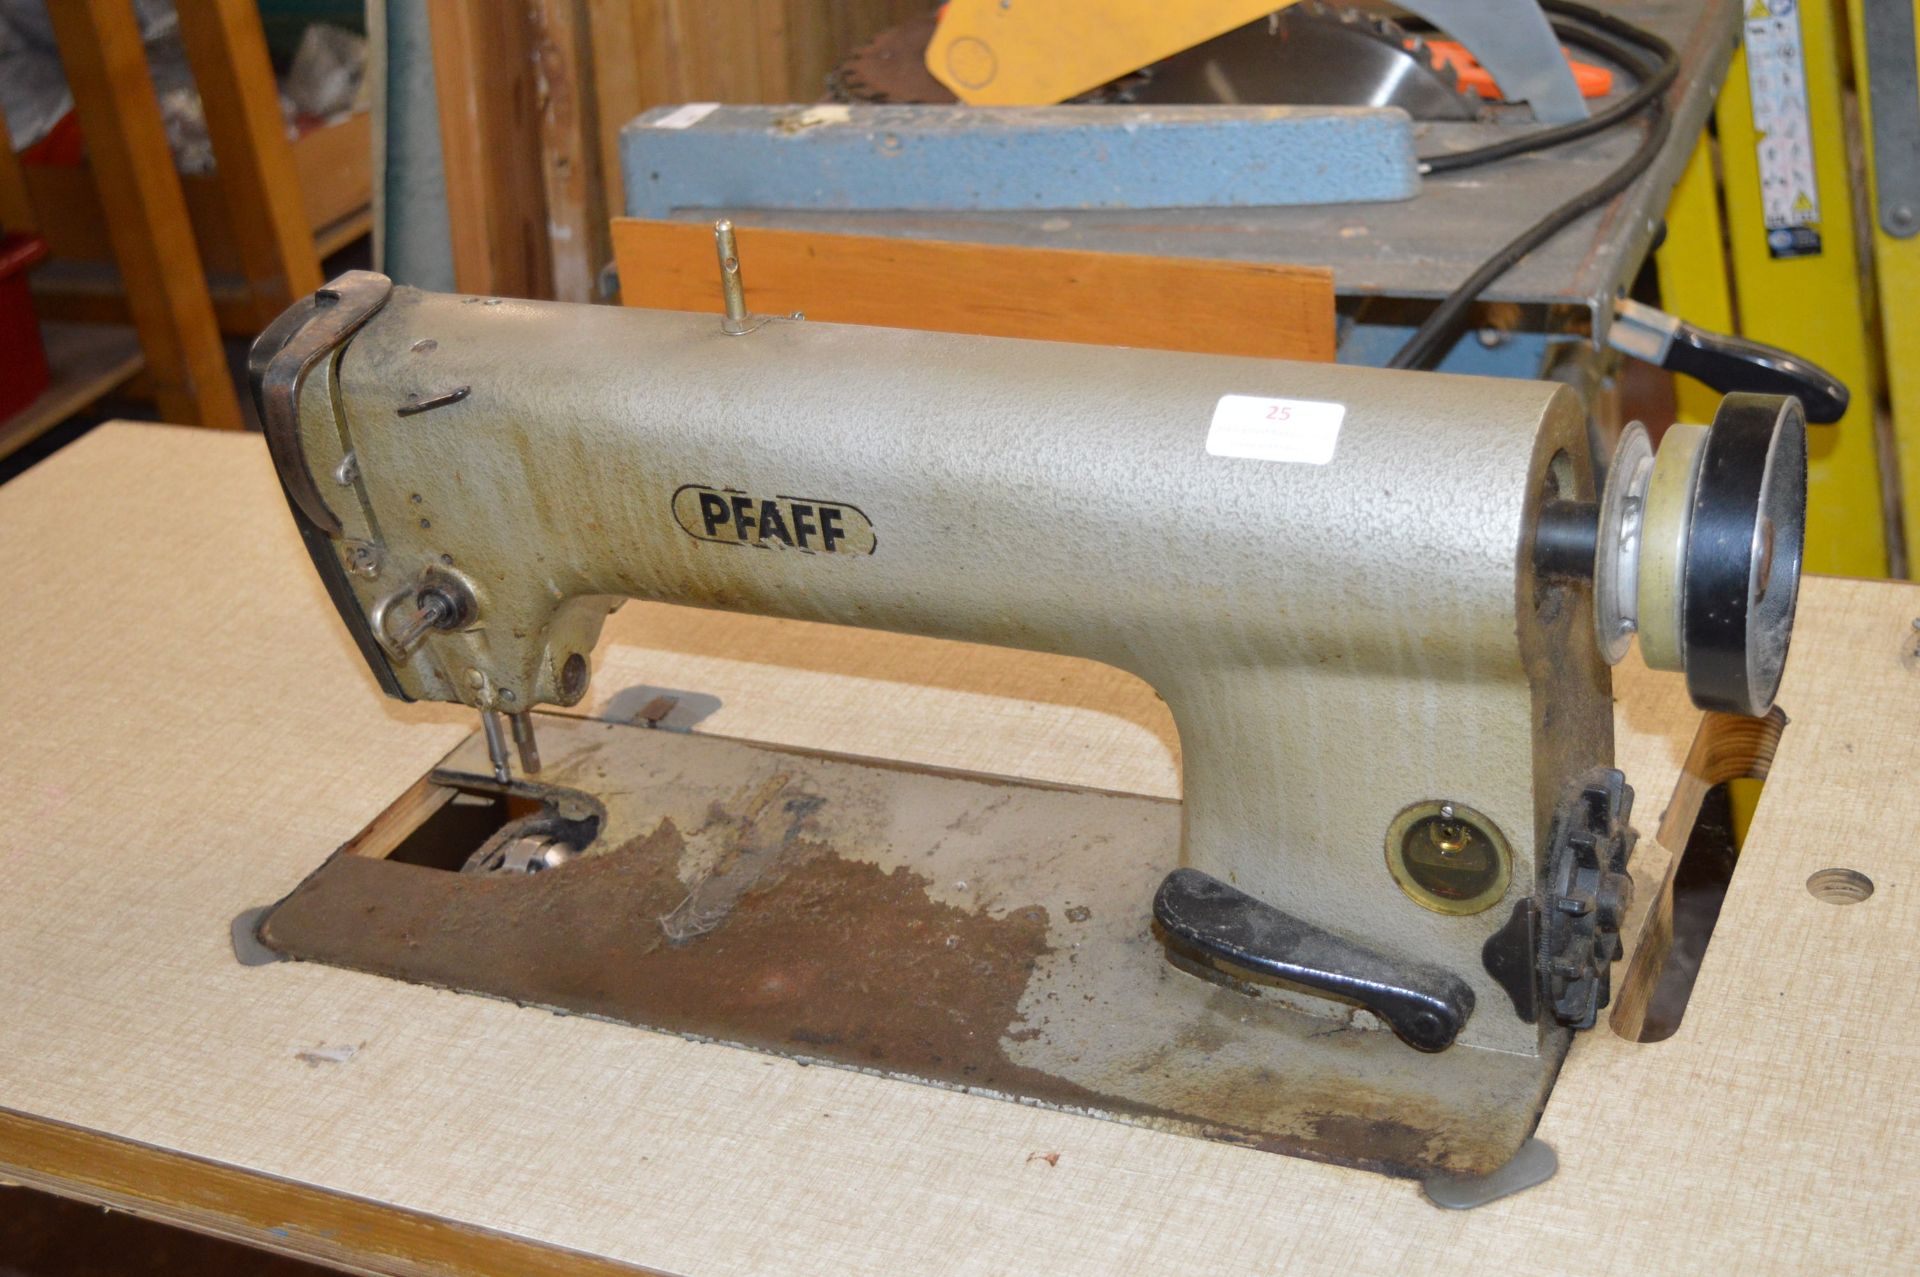 Pfaff Sewing Machine for Spares/Repair - Image 2 of 2